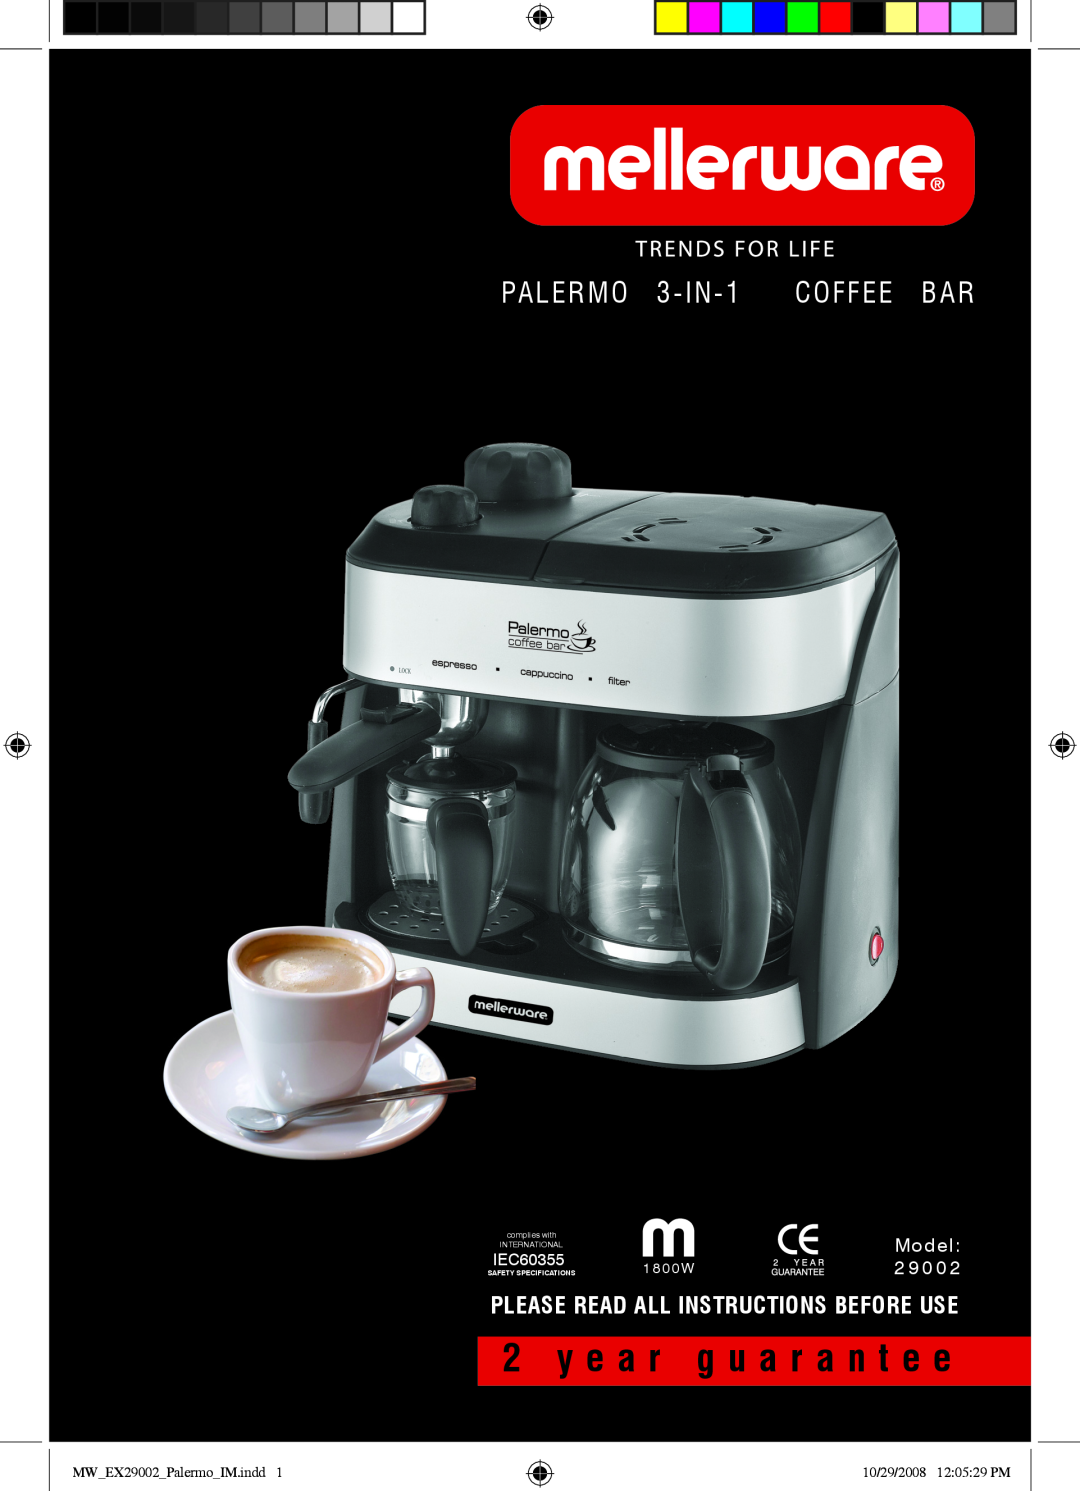 Mellerware 29002 specifications y e a r g u a r a n t e e, PALERMO 3 - IN - 1 COFFEE BAR, Model, IEC60355, 2 9 0 0 